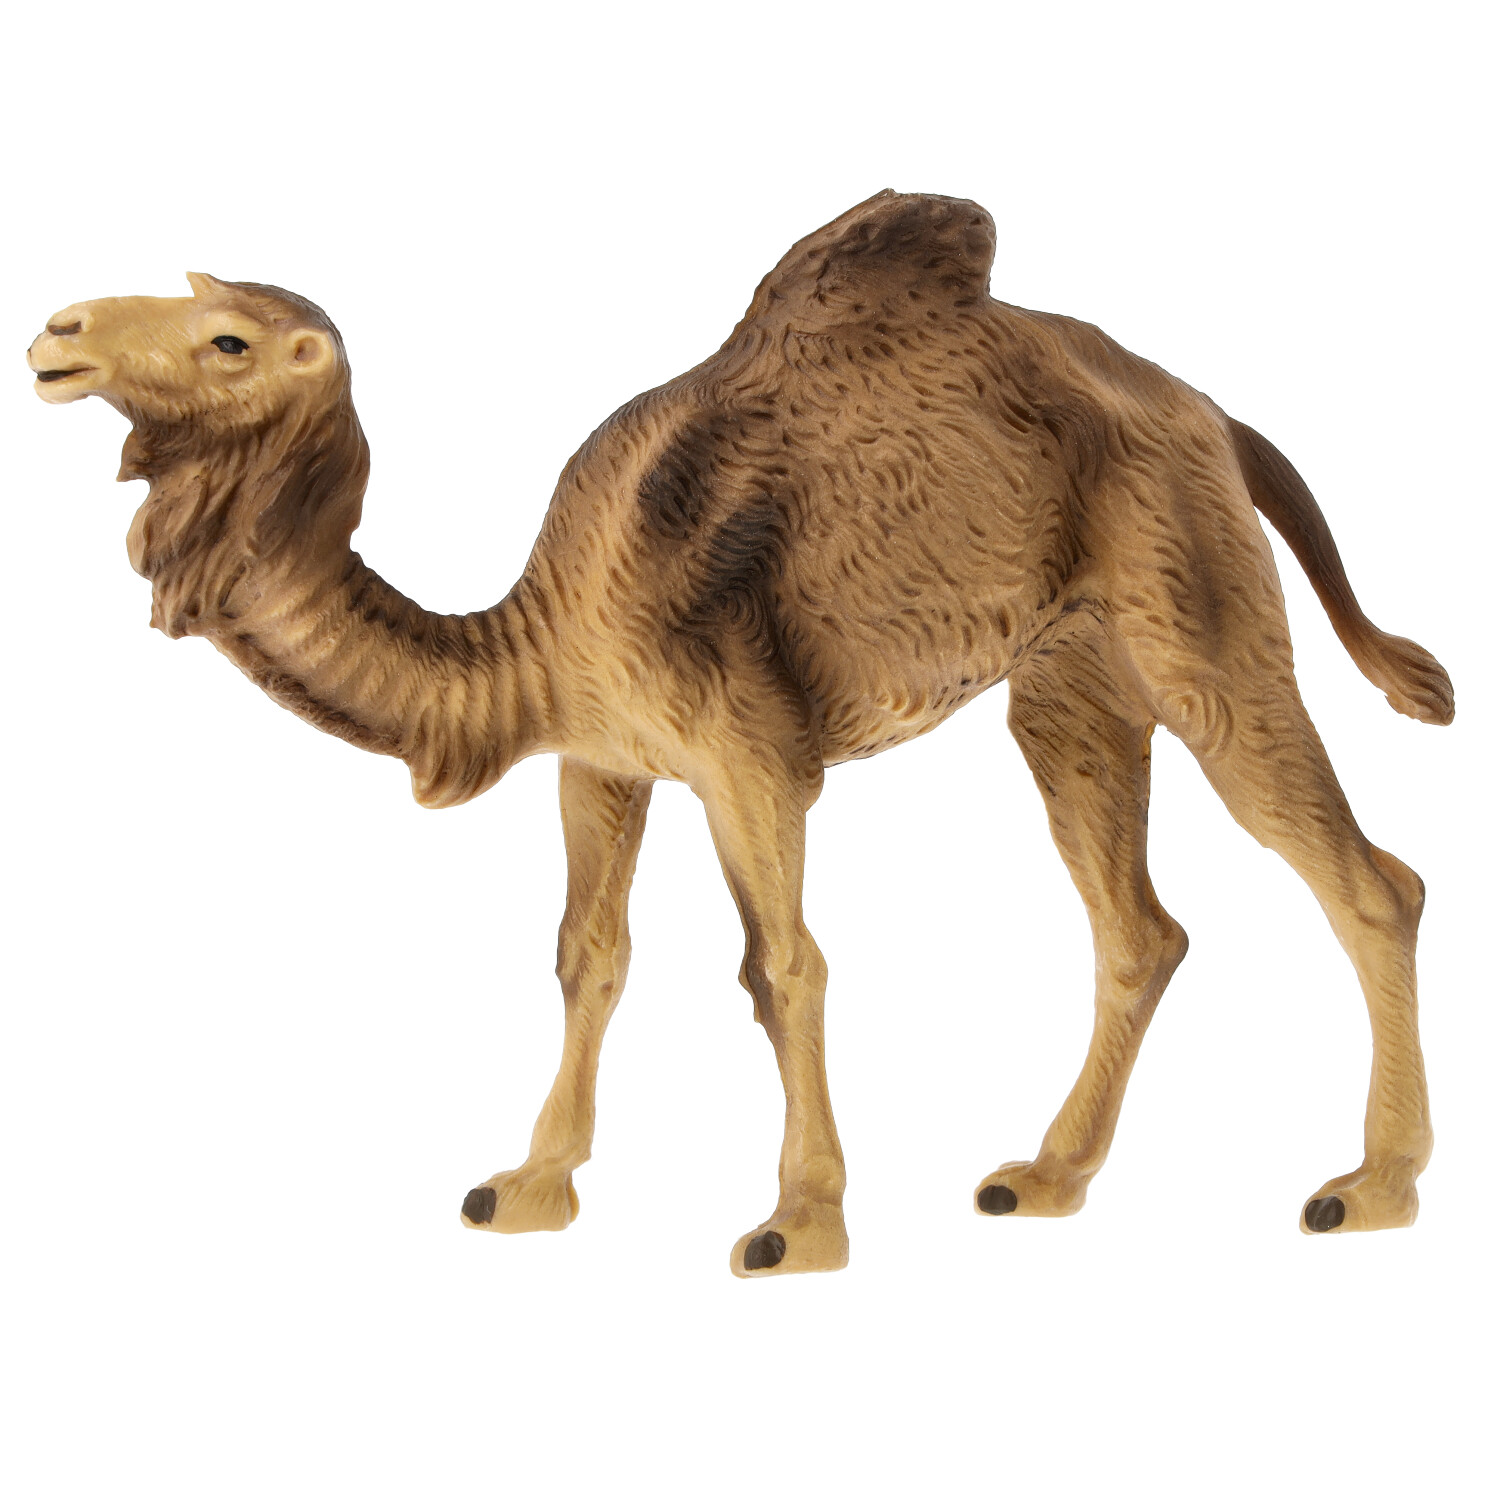 Kamel stehend, zu 9cm Fig. (Kunststoff) - Marolin Plastik - Krippenfigur aus Kunststoff - made in Germany